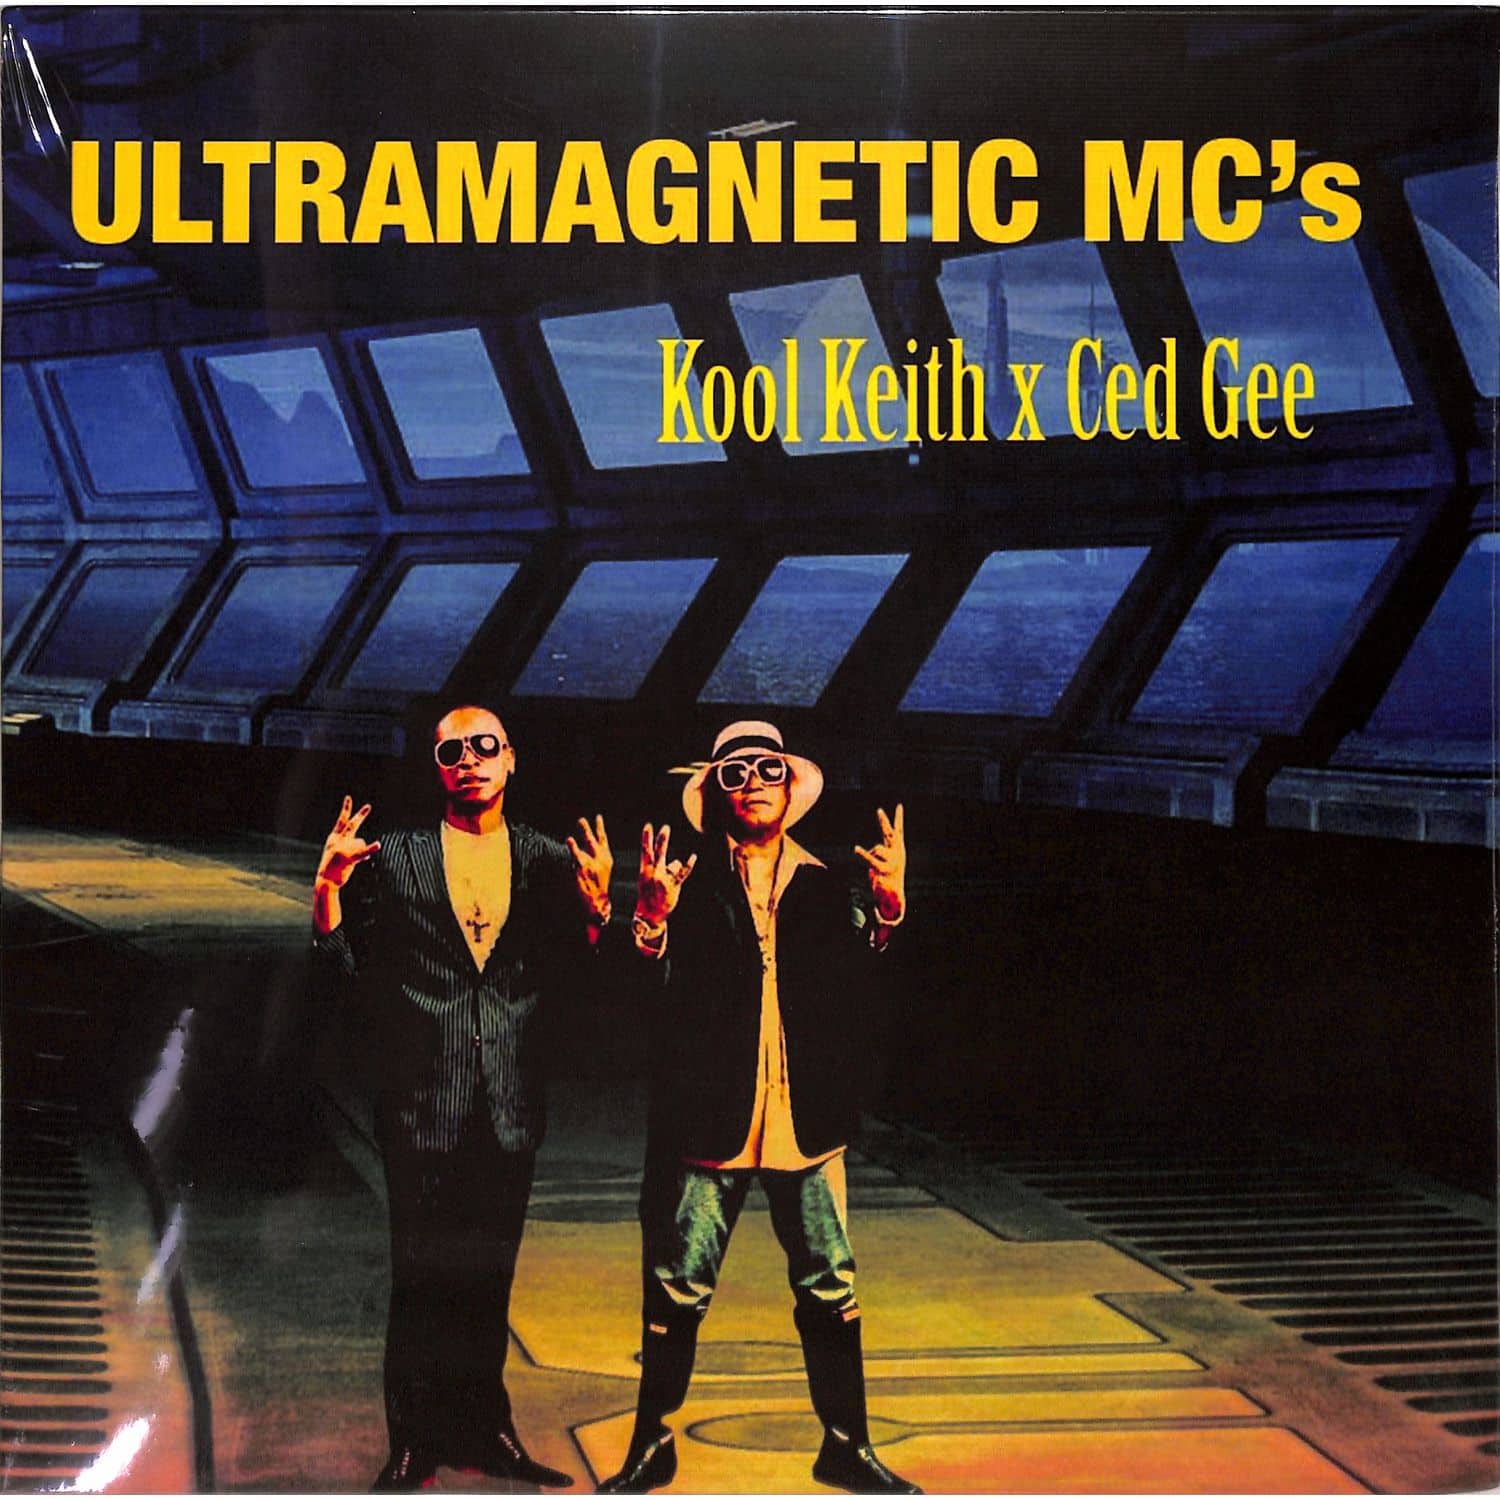 Ultramagnetic MCs - CED GEE X KOOL KEITH 